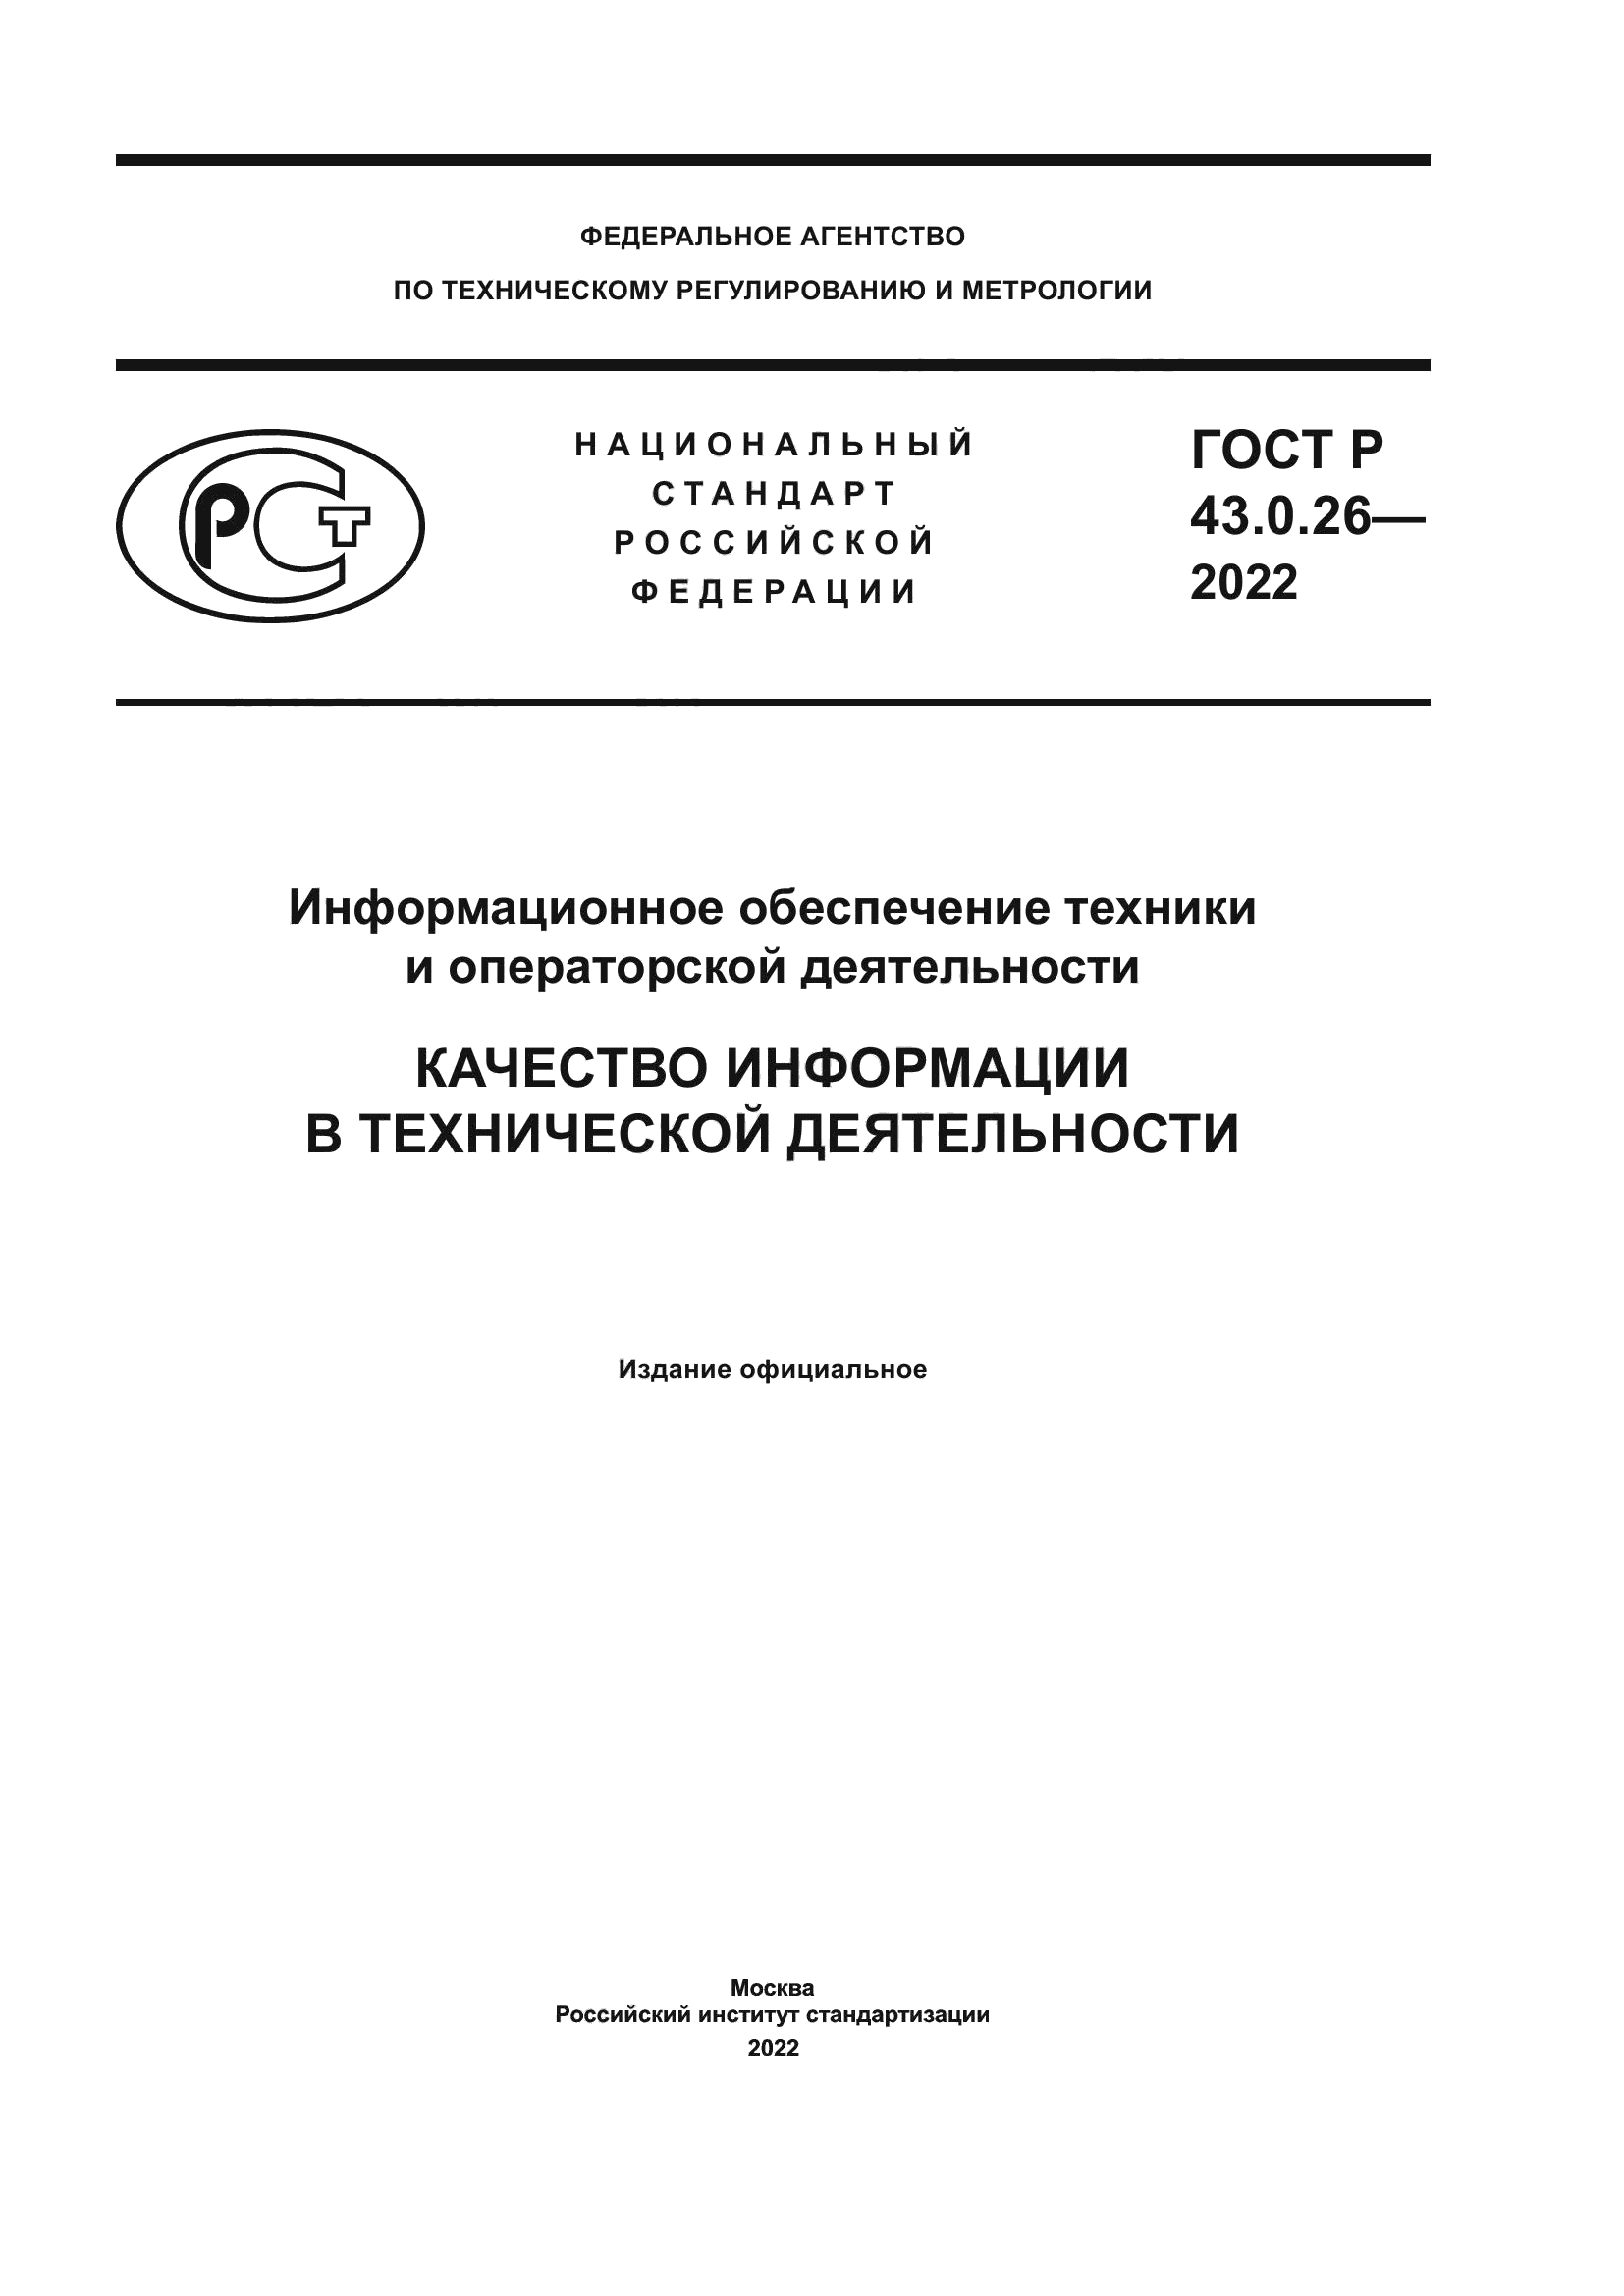 ГОСТ Р 43.0.26-2022